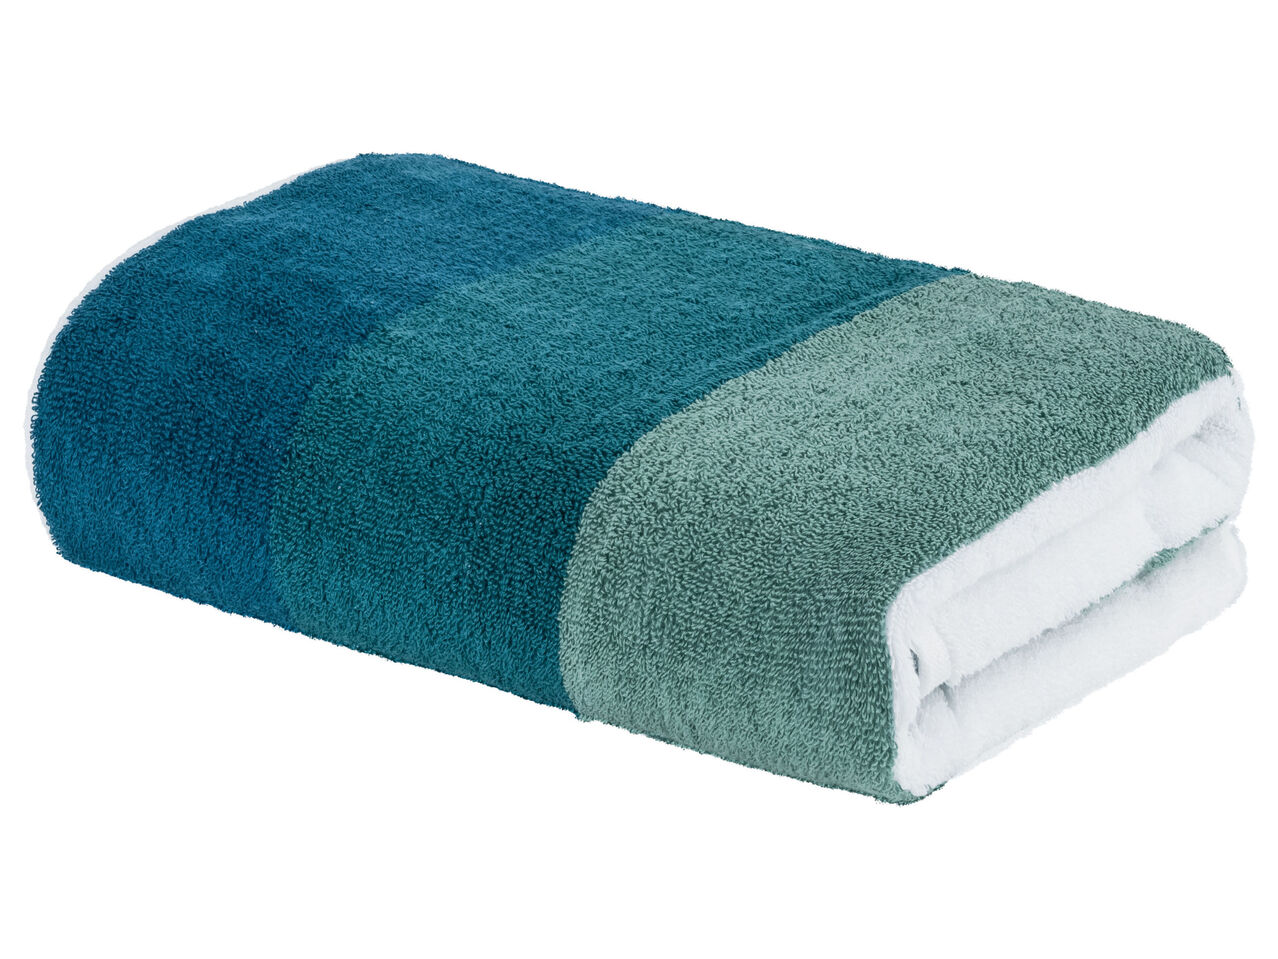 LIVARNO home Ręcznik frotté 70 x 140 cm , cena 24,99 PLN 
LIVARNO home Ręcznik ...